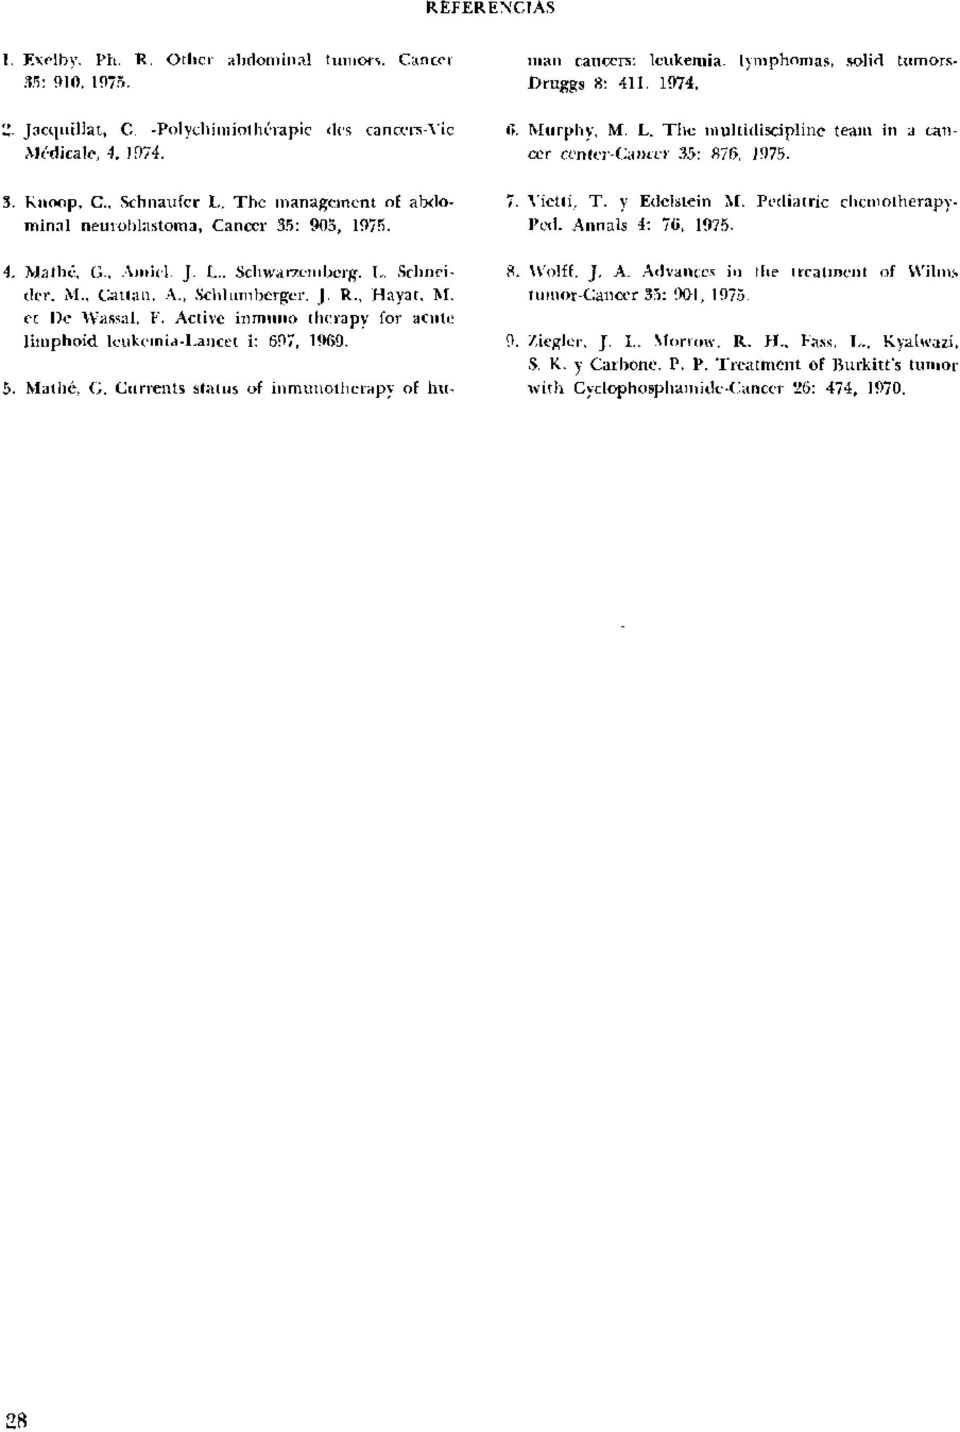 Yictti, T. y Edclstein M. Pediatric chemotherapyminal neuroblastoma, Cancer 35: 905, 1975. Ped. Annals 4: 7(i, 1975. 4. Mathe, G., Amiel J. I... Schwaiv.emberg, 1.. Schnci- 8. \Volff, J. A. Advances in tiie treatment of Wilms der, M.